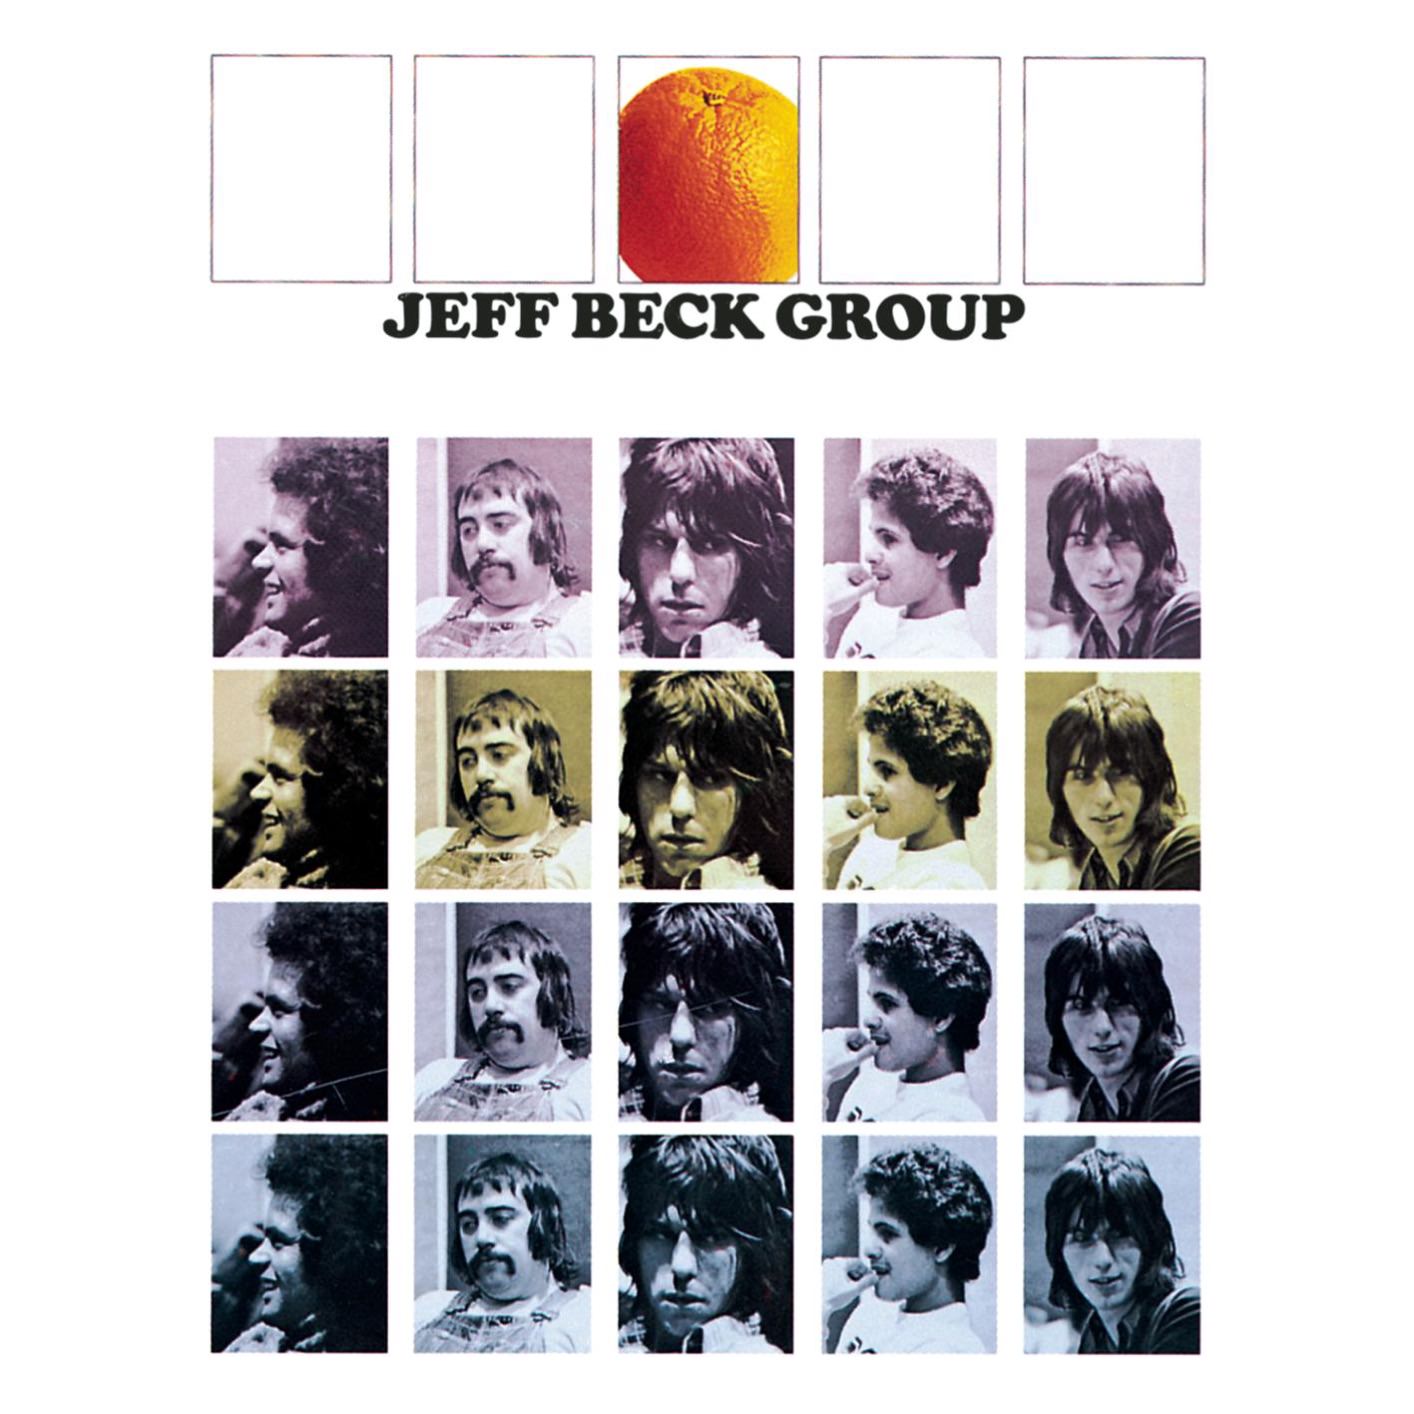 Jeff Beck Group - Jeff Beck Group (1972/2016) [Qobuz FLAC 24bit/96kHz]